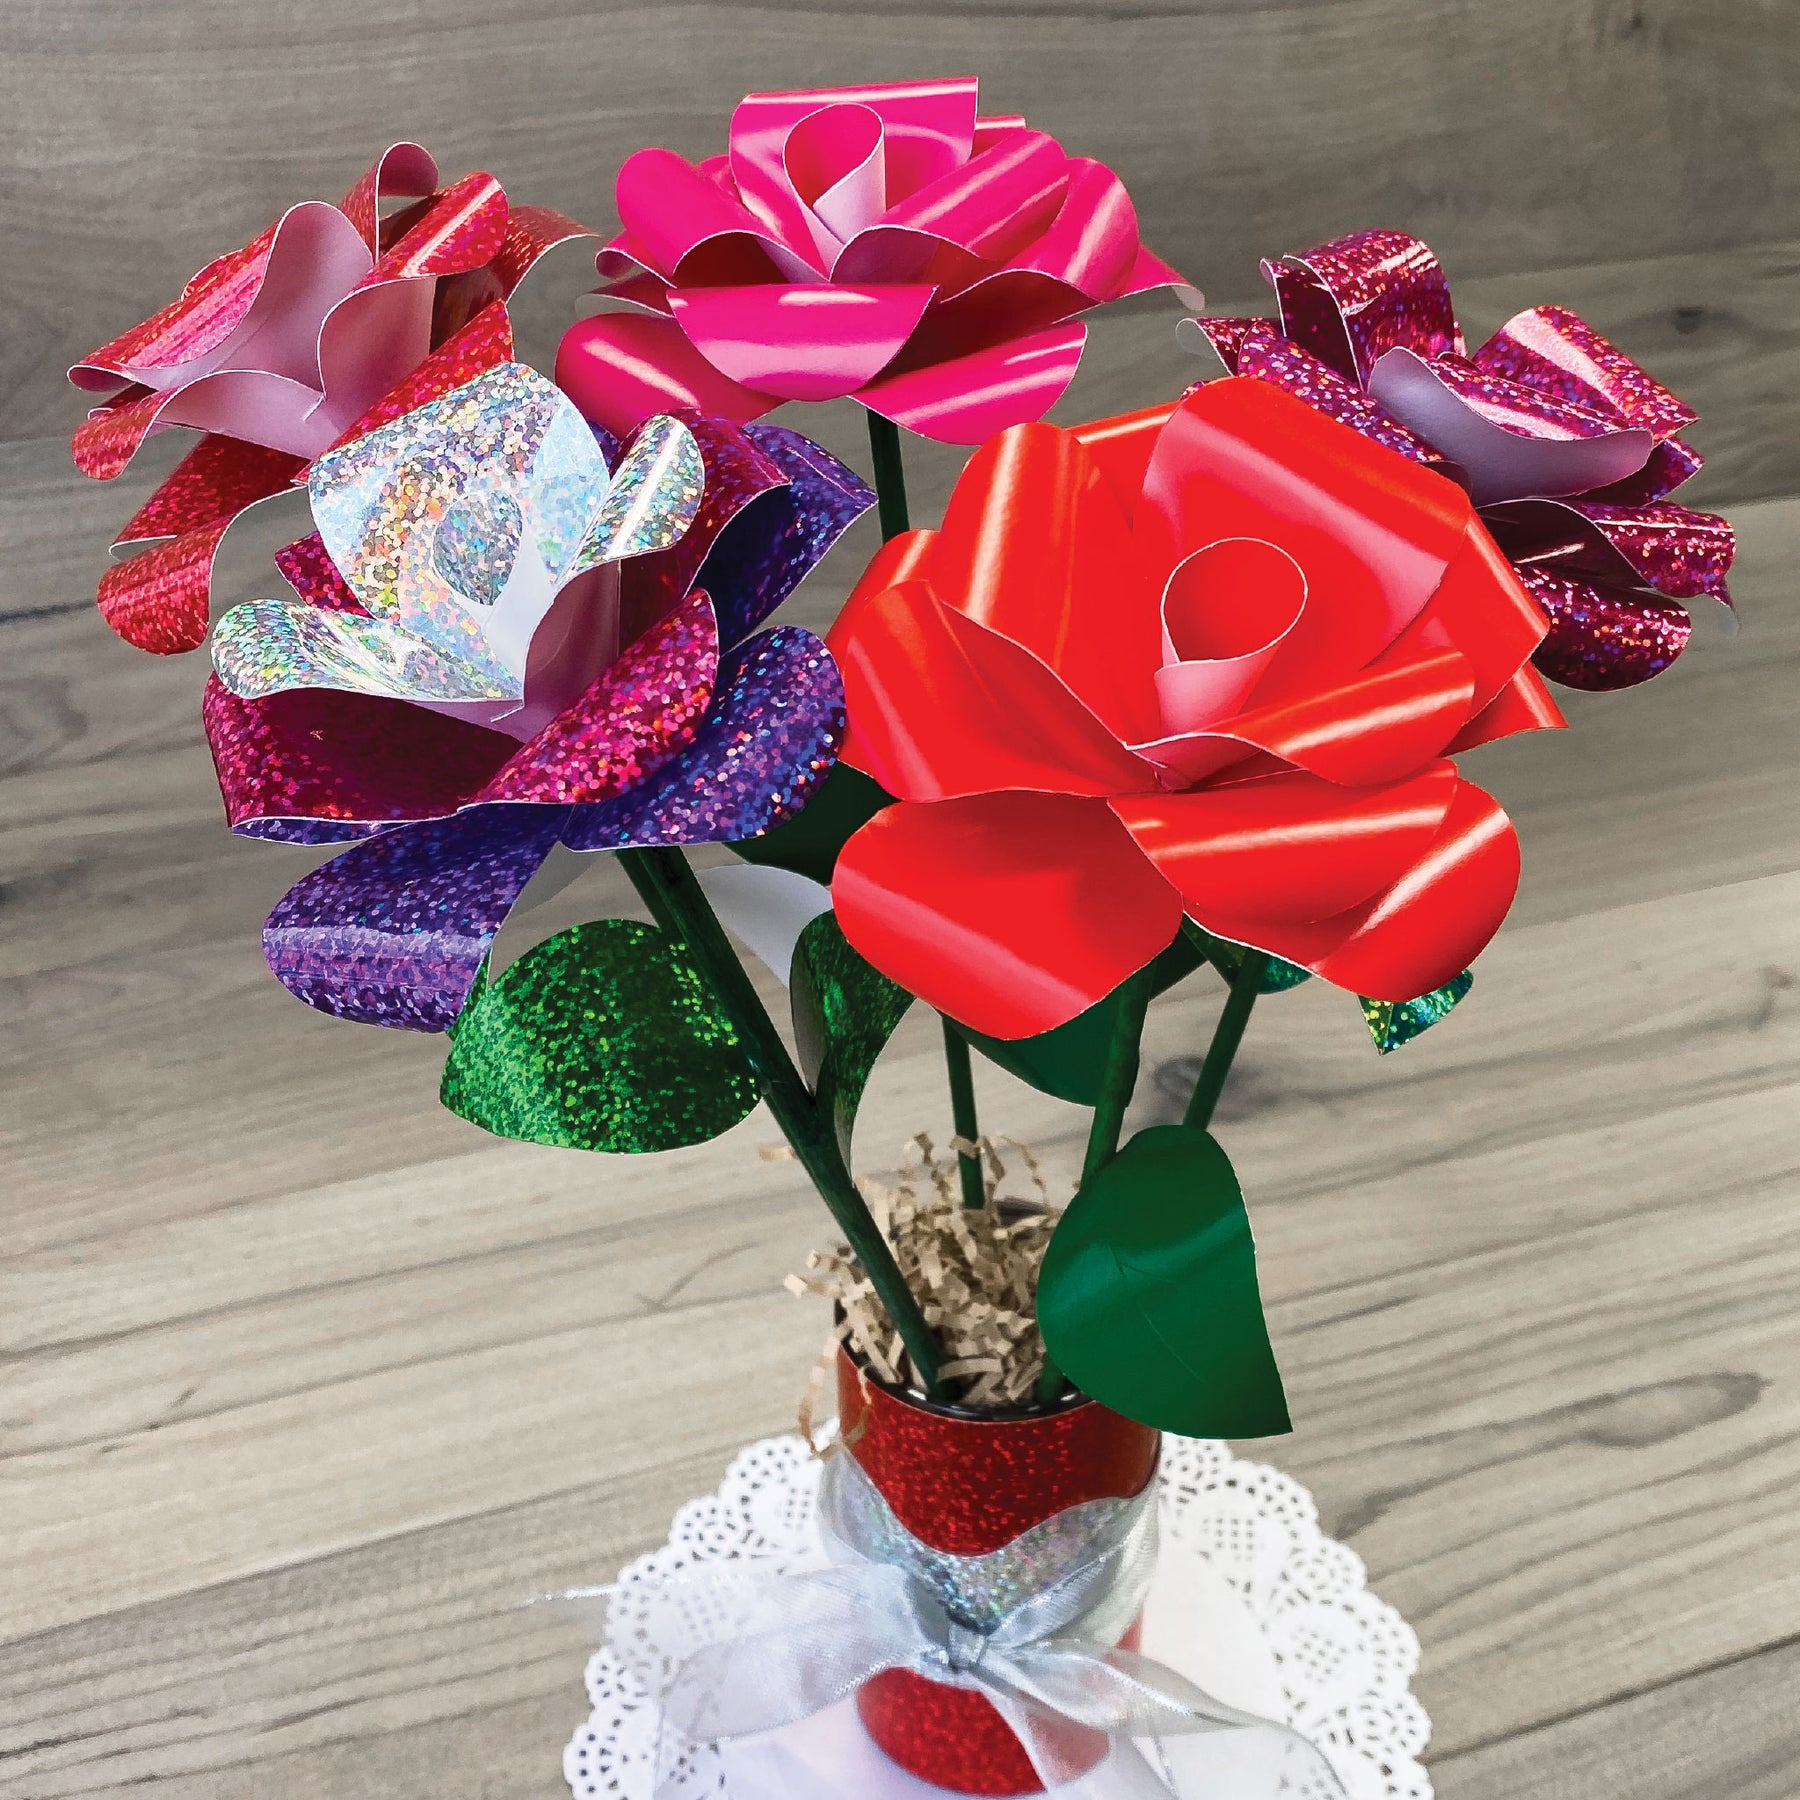 Purple Rose Pick, Bouquet Flower, Ribbon Rose, Vase Flowers